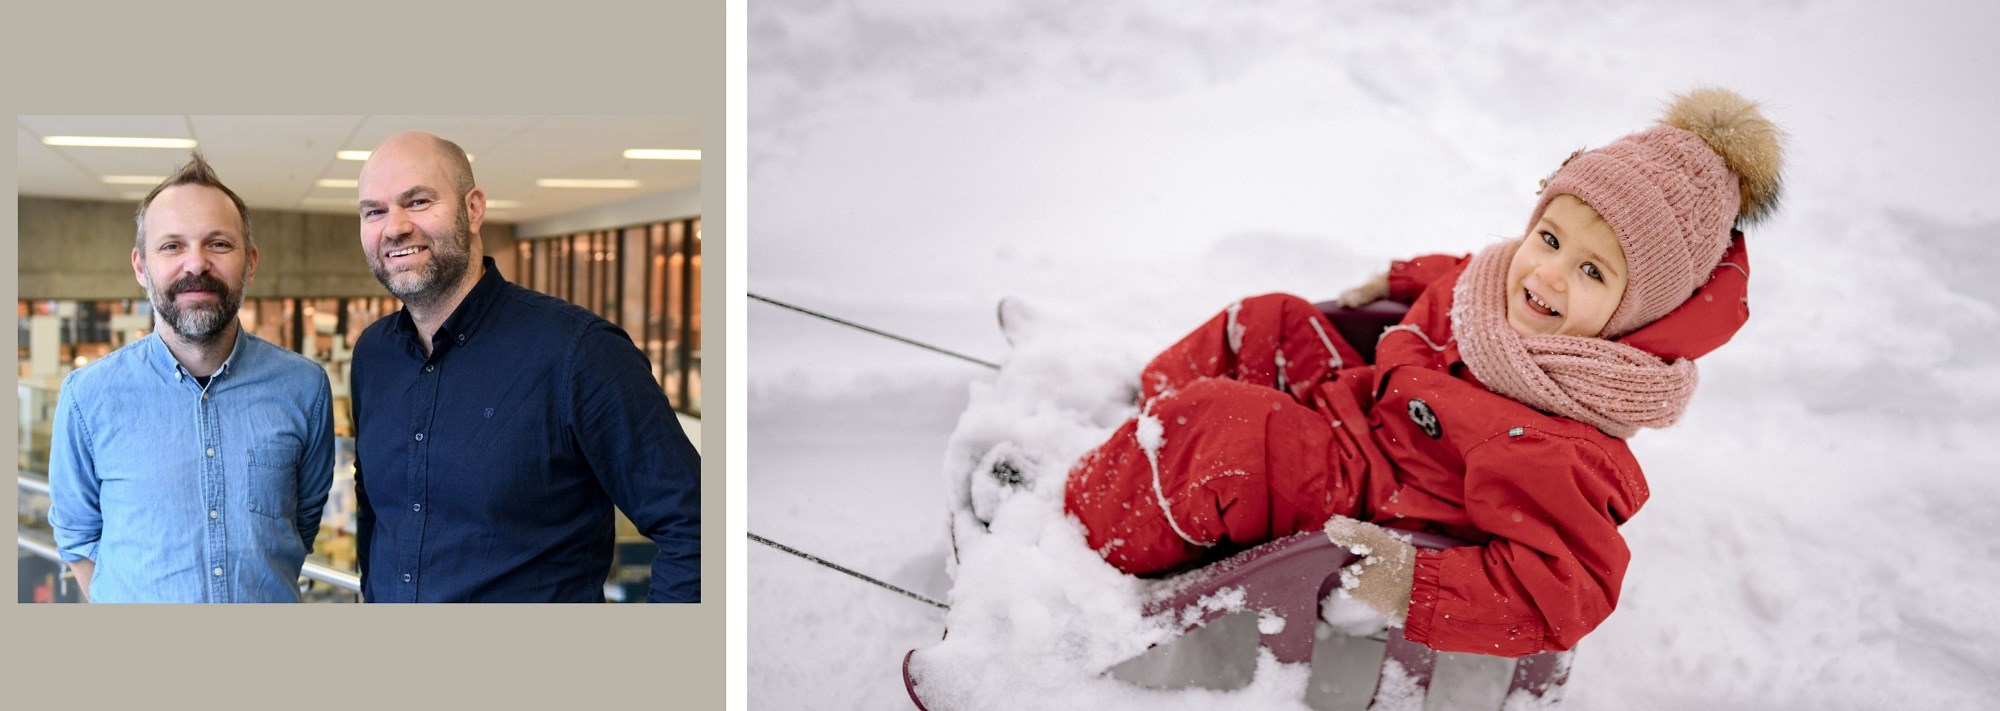 jørgensen, L Pedersen, barn i snø, av yan krukau, pexels